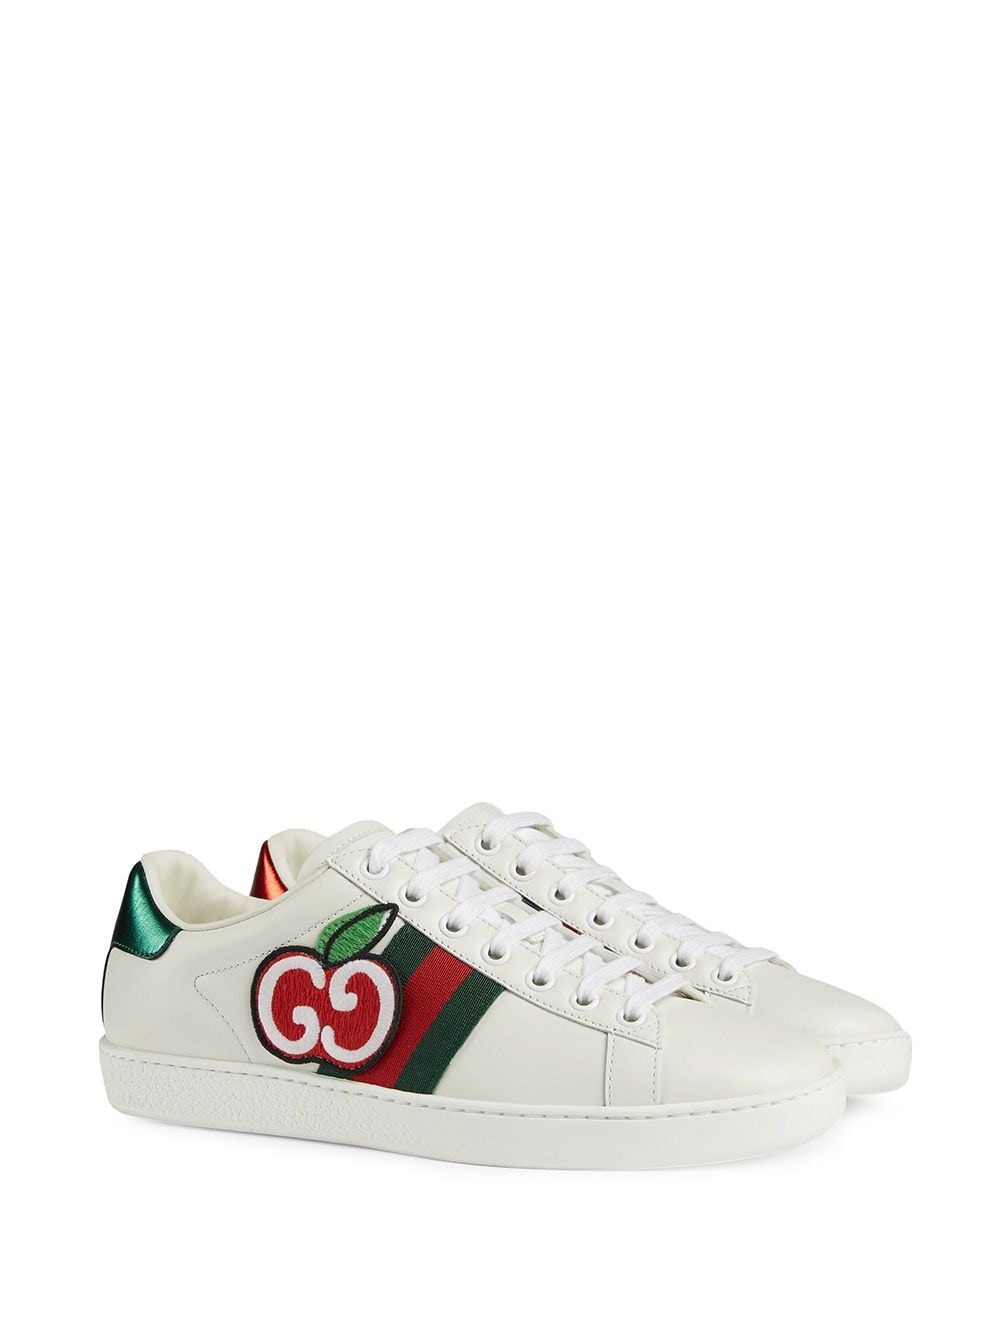 Gucci Ace Sneakers - Farfetch